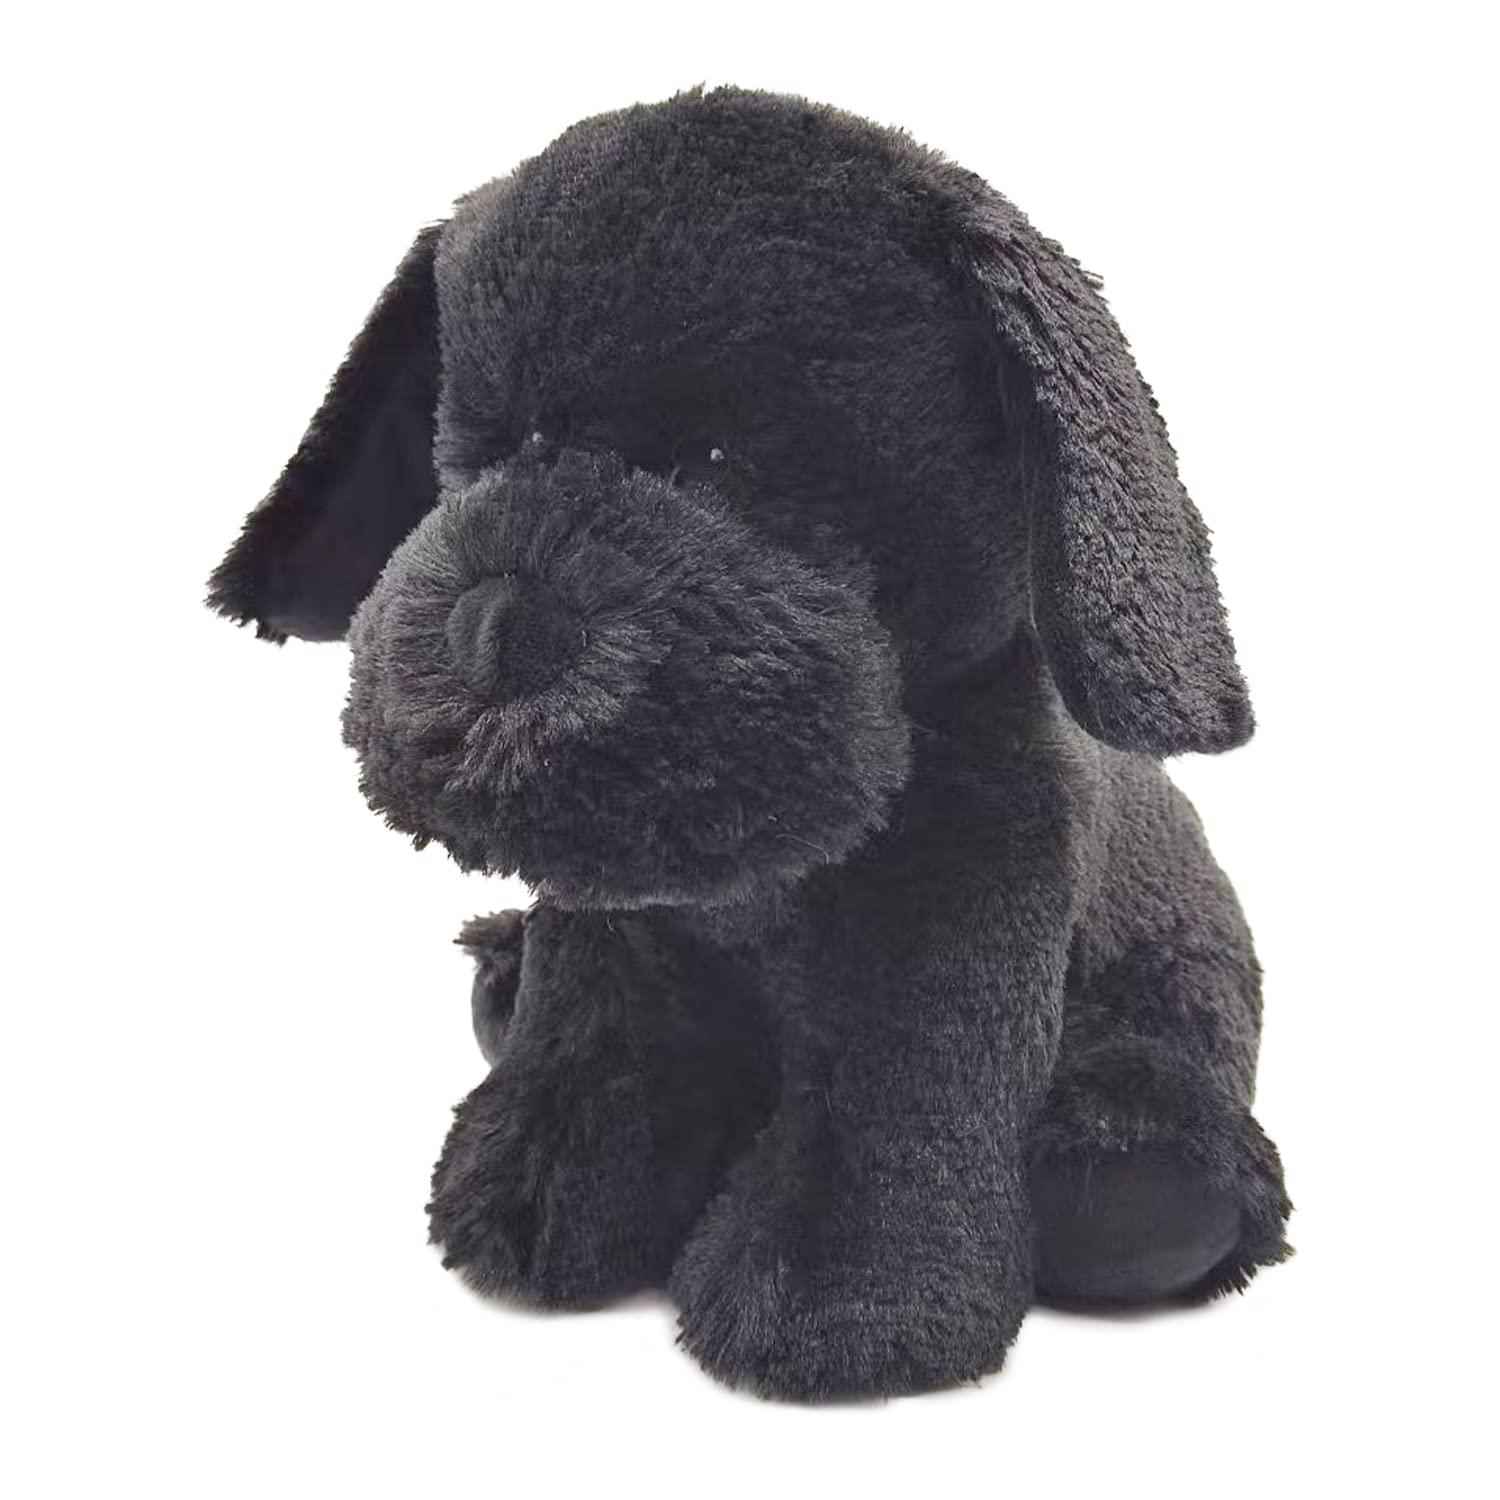 Intelex black lab warmies - cozy plush heatable lavender scented stuffed animal